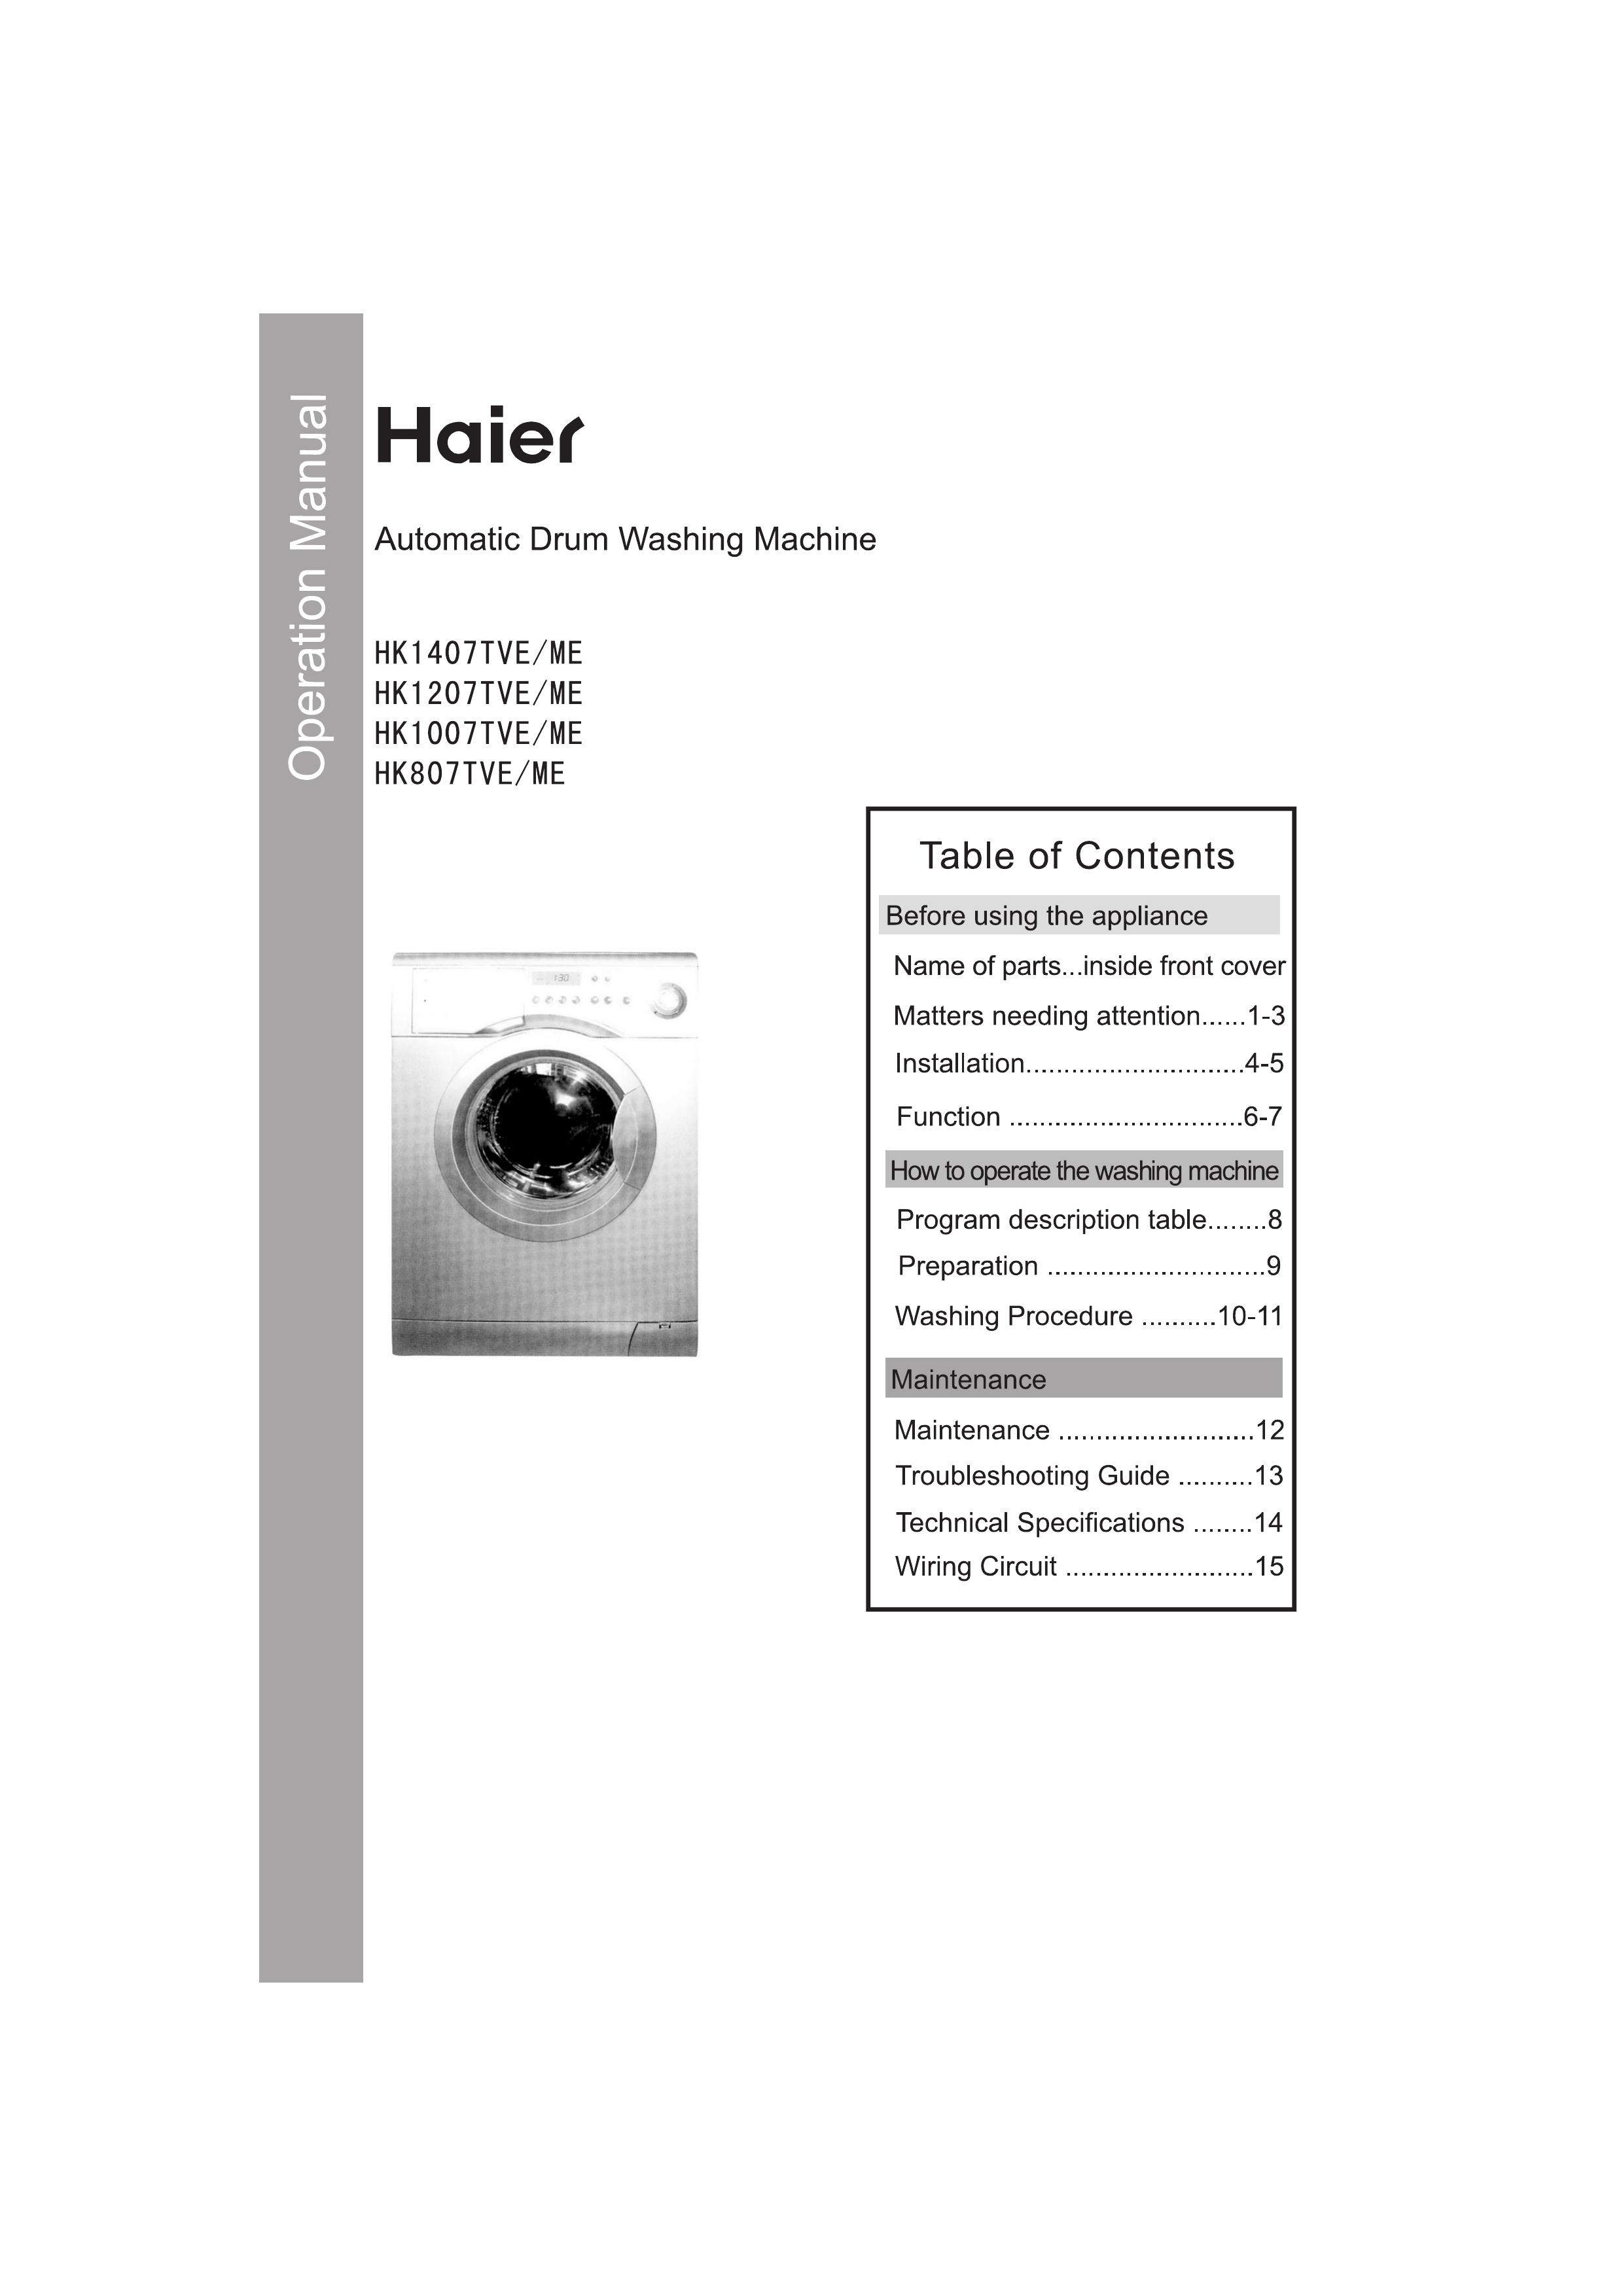 Haier HK807TVE/ME Washer User Manual